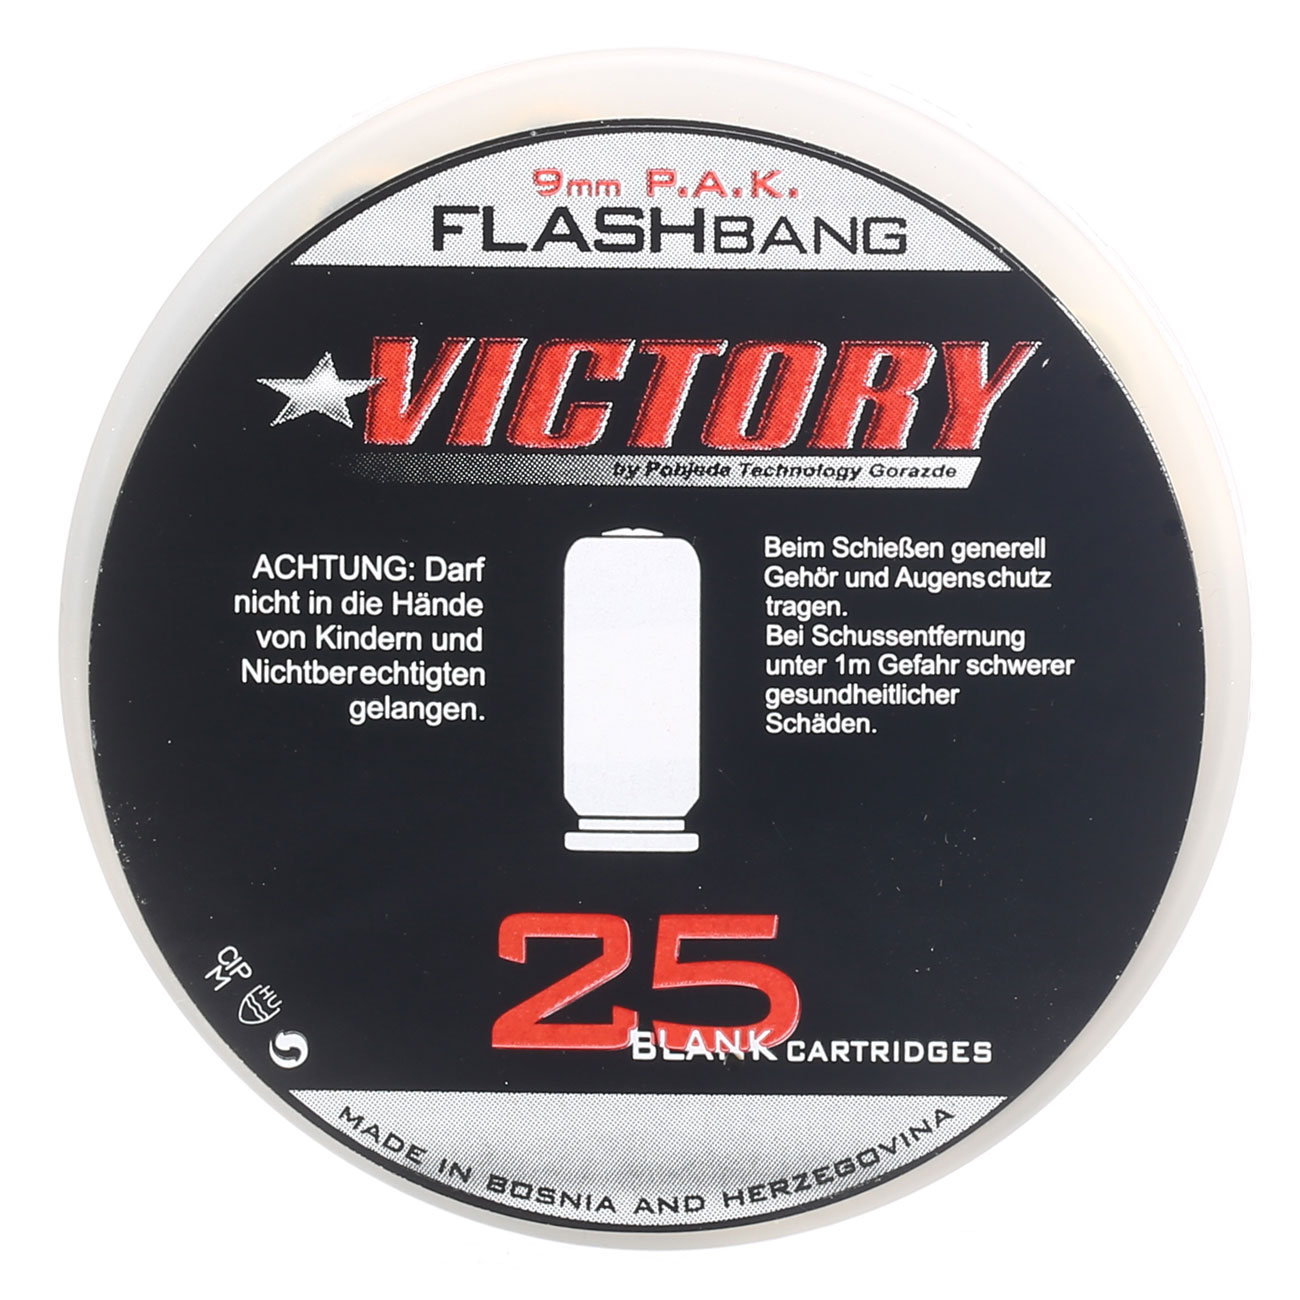 Platzpatronen Victory Flashbang 9mm P.A.K 25 Stck Bild 3